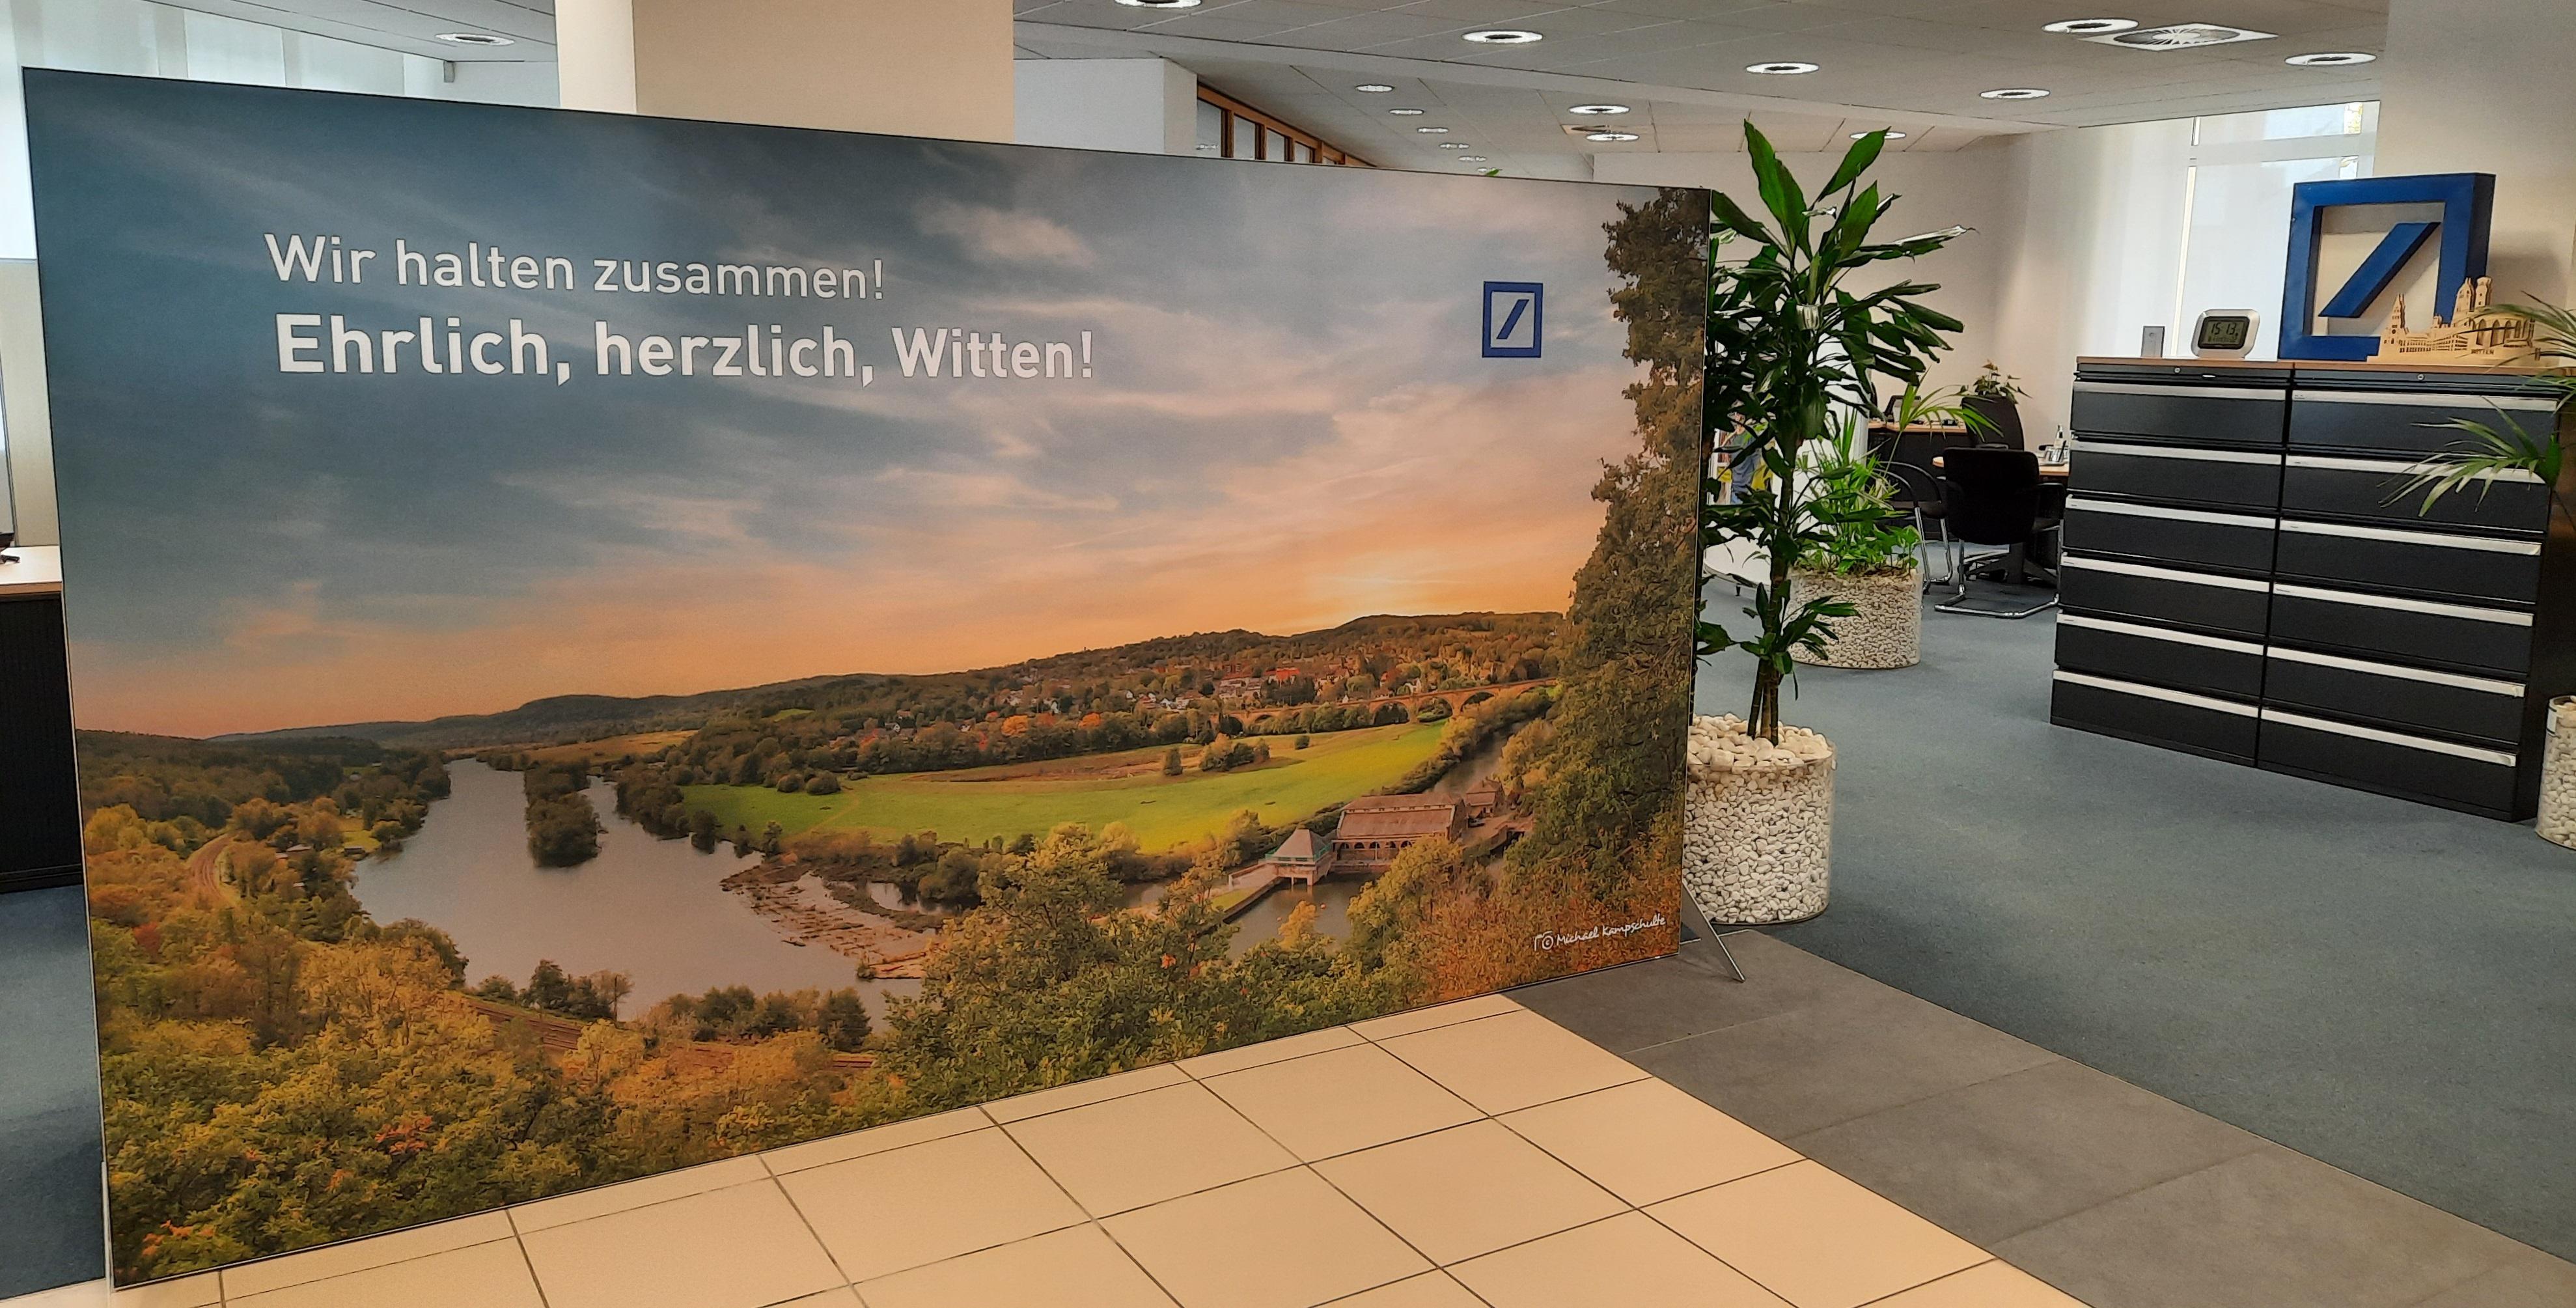 Deutsche Bank Filiale, Wideystraße 9 in Witten